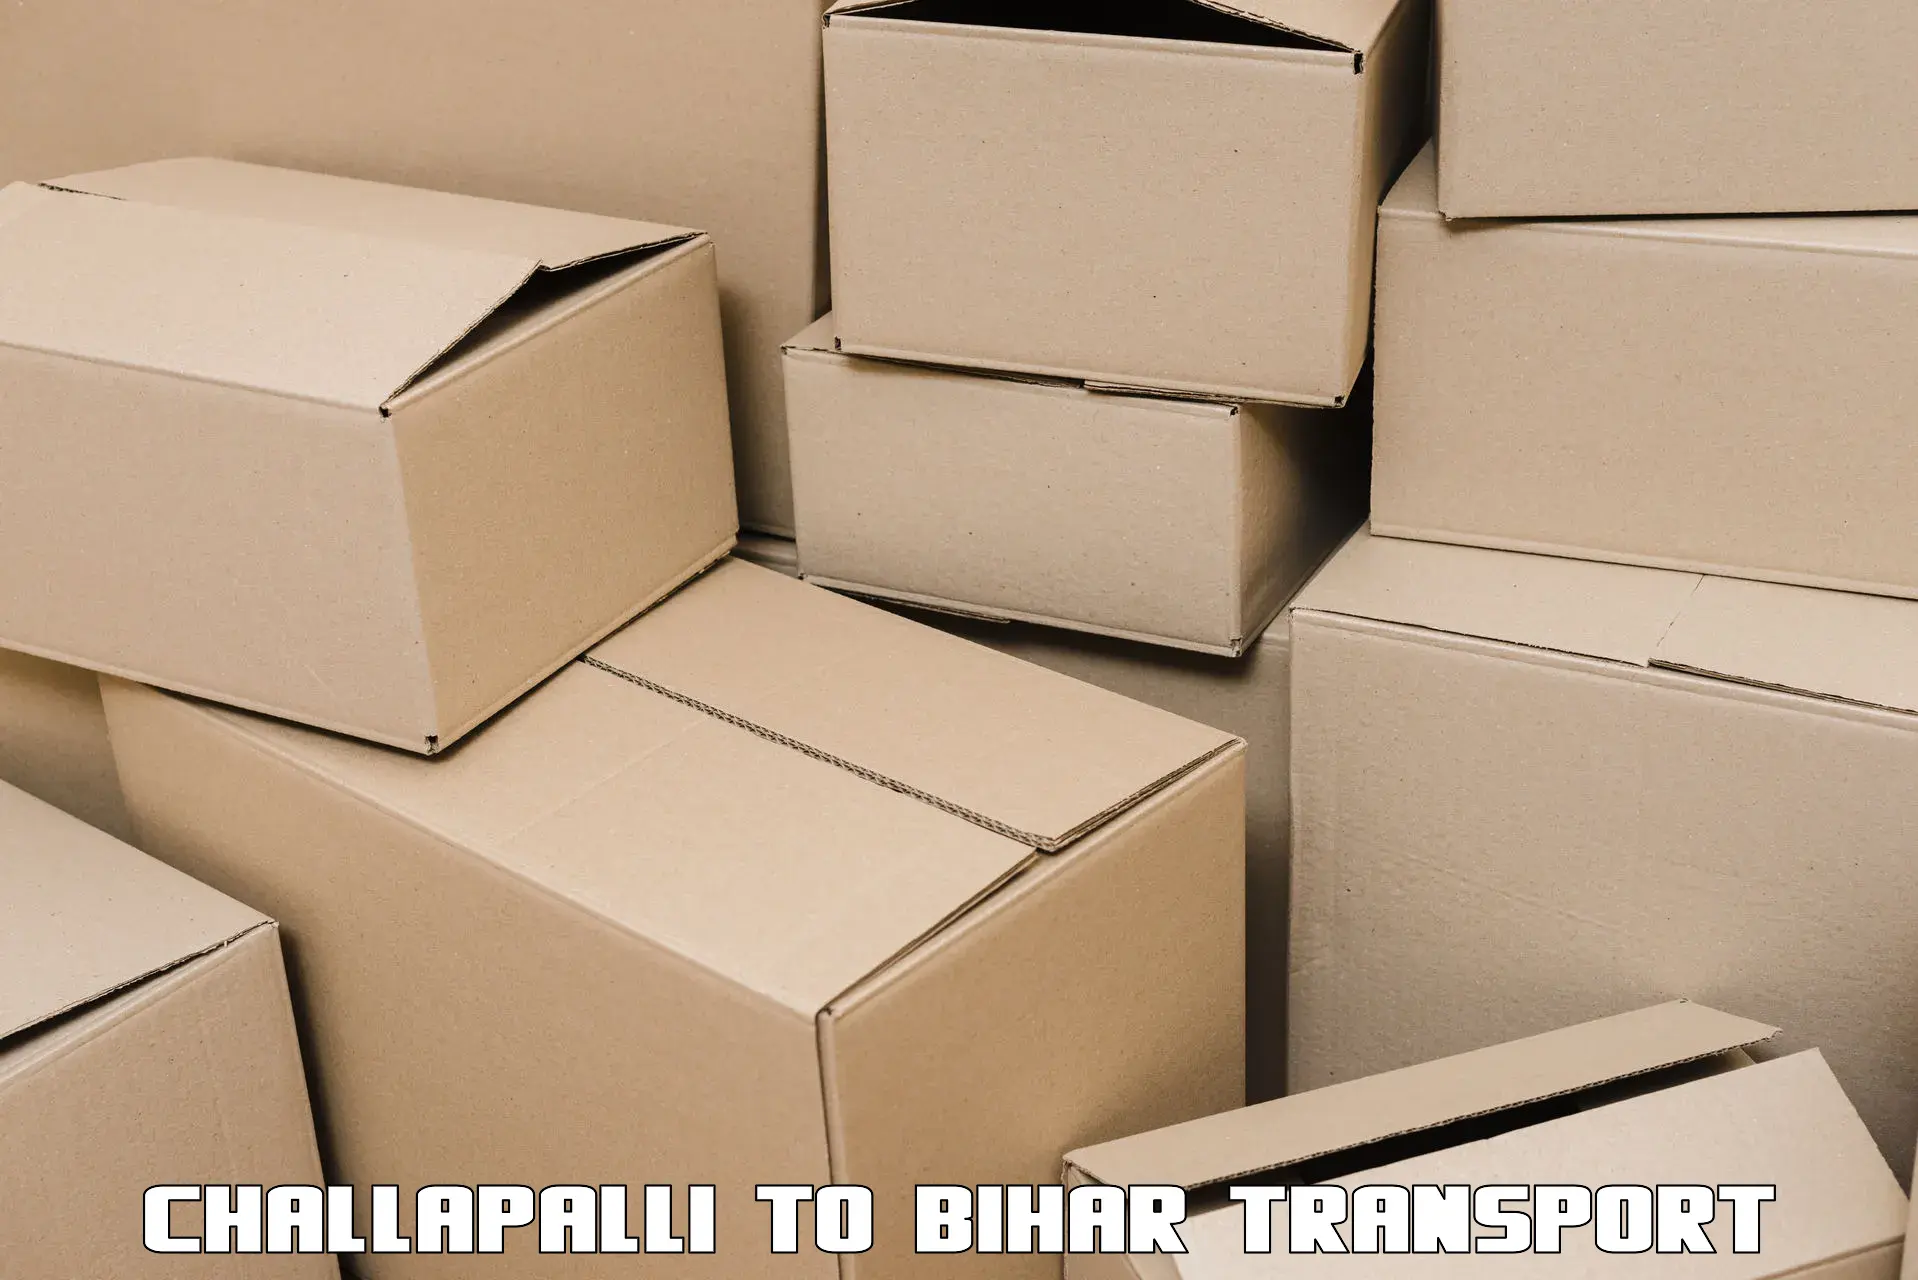 Daily transport service Challapalli to Saran